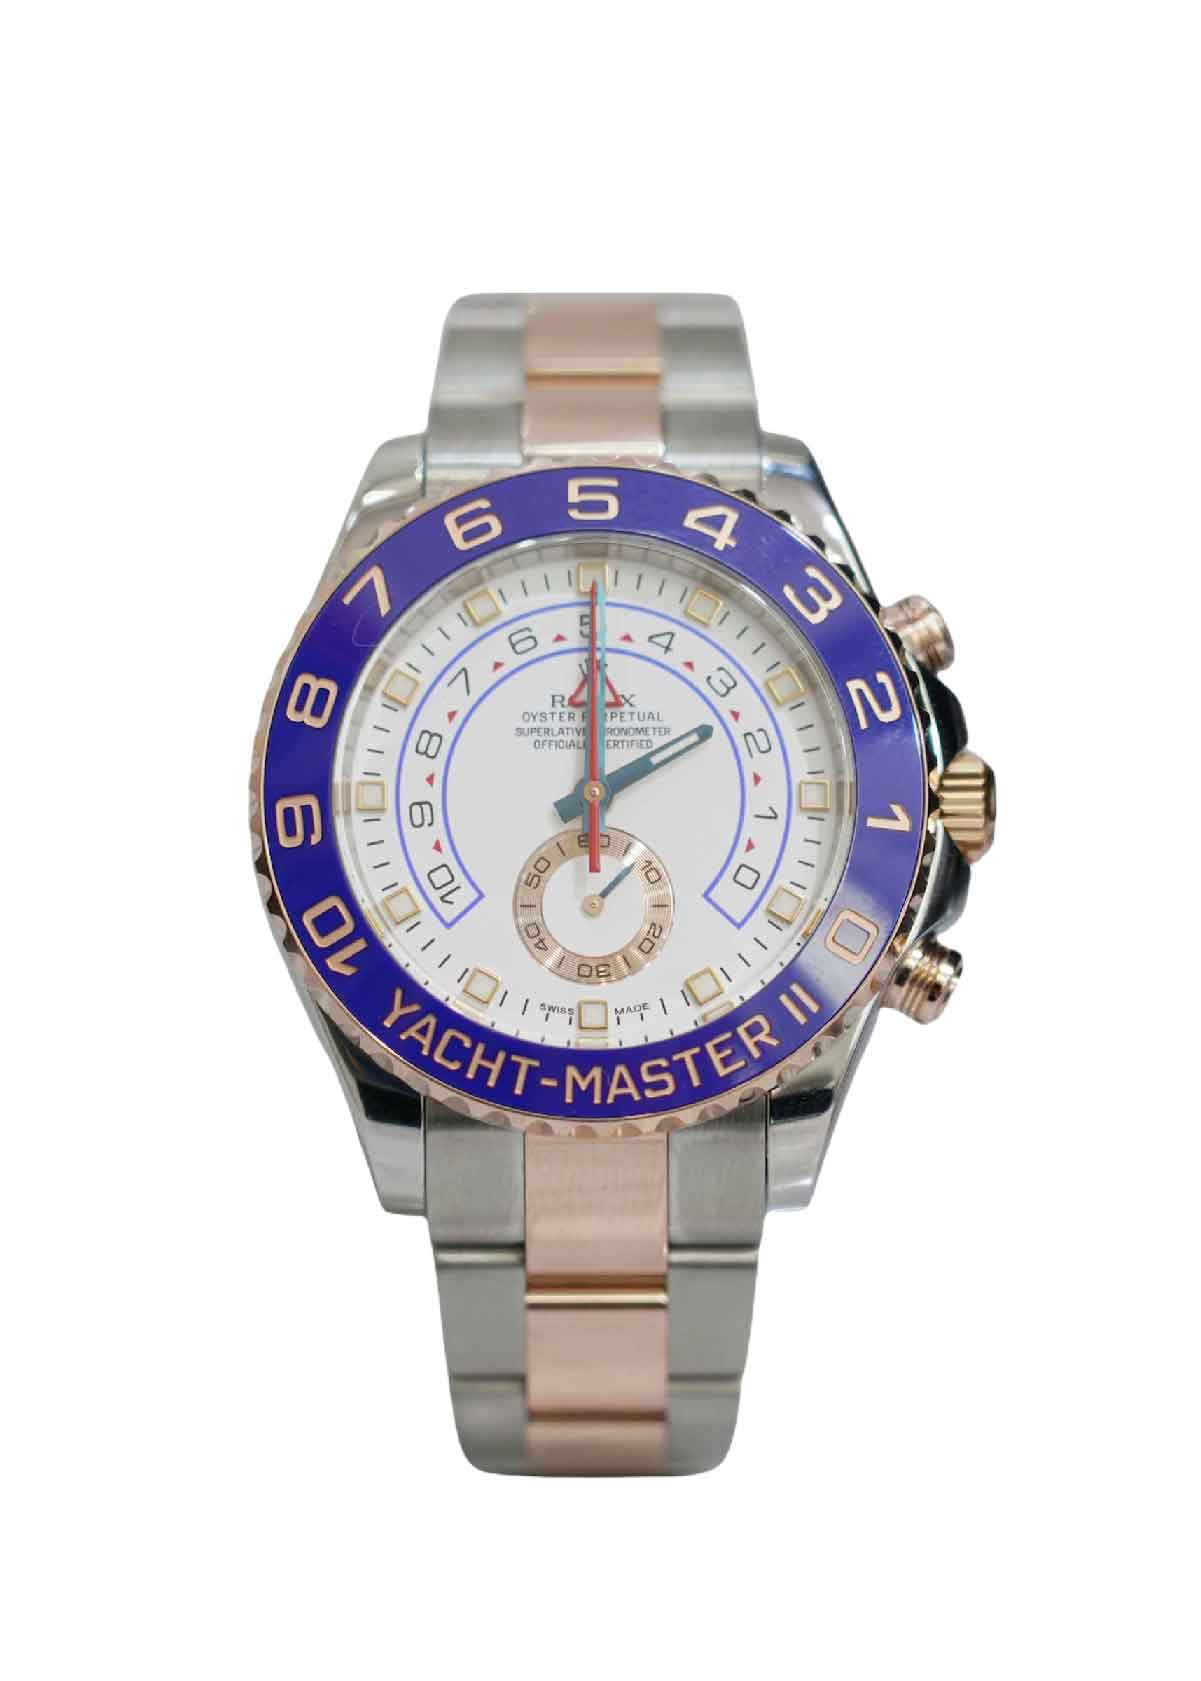 Rolex Men's Yacht-Master II 44 Watch